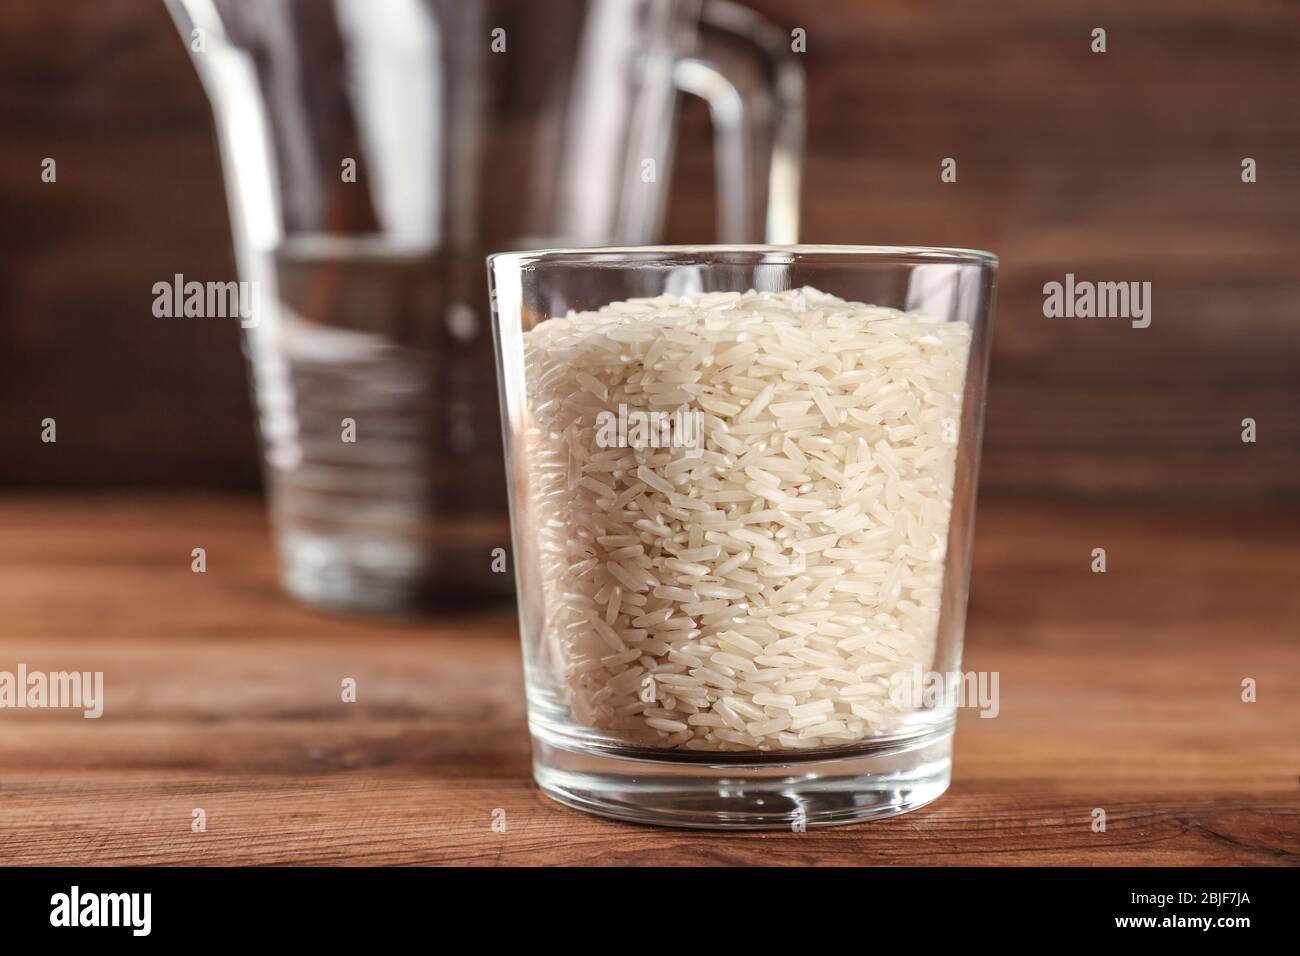 Сколько риса в граненом. Стакан риса. Рис в стакане 200. Стакан риса в граммах. 1 5 Стакана риса.